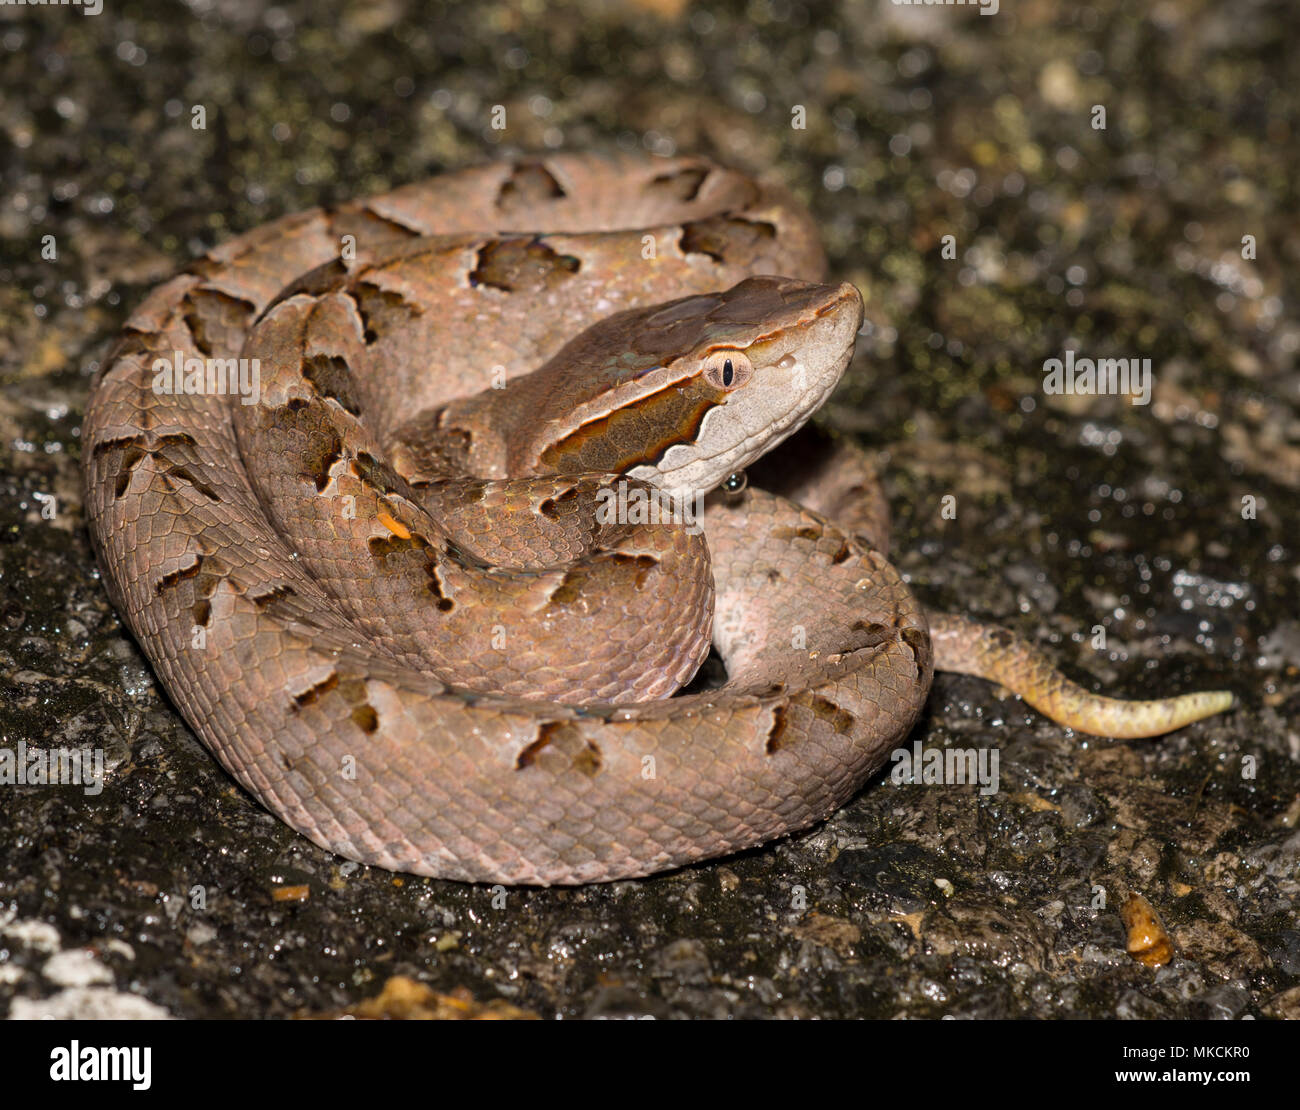 Malayan Pit Viper (Calloselasma rhodostoma) Krabi region of Thailand. Stock Photo